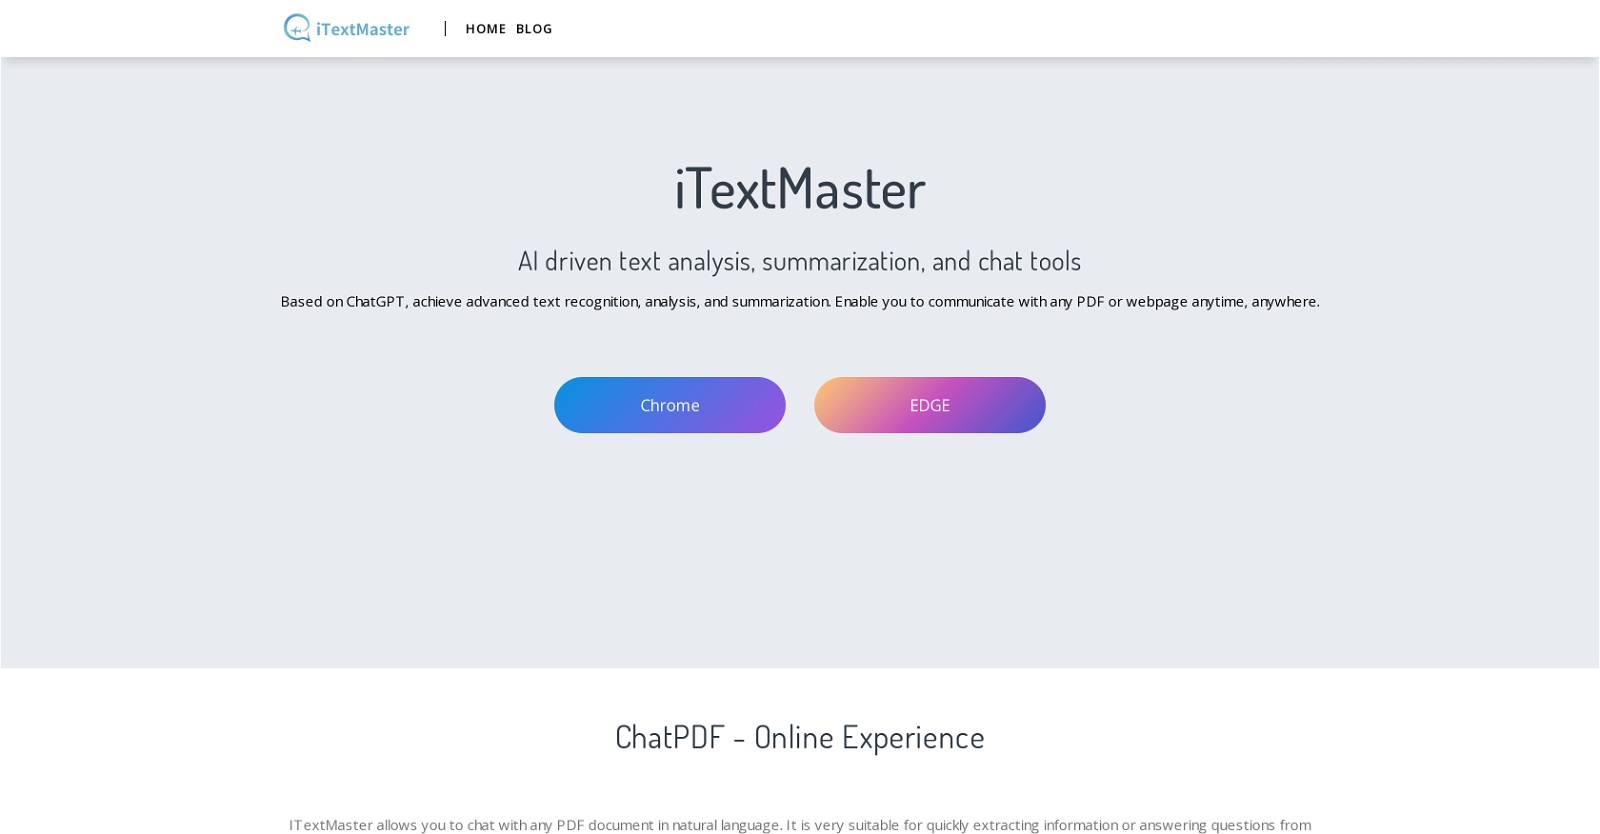 iTextMaster website